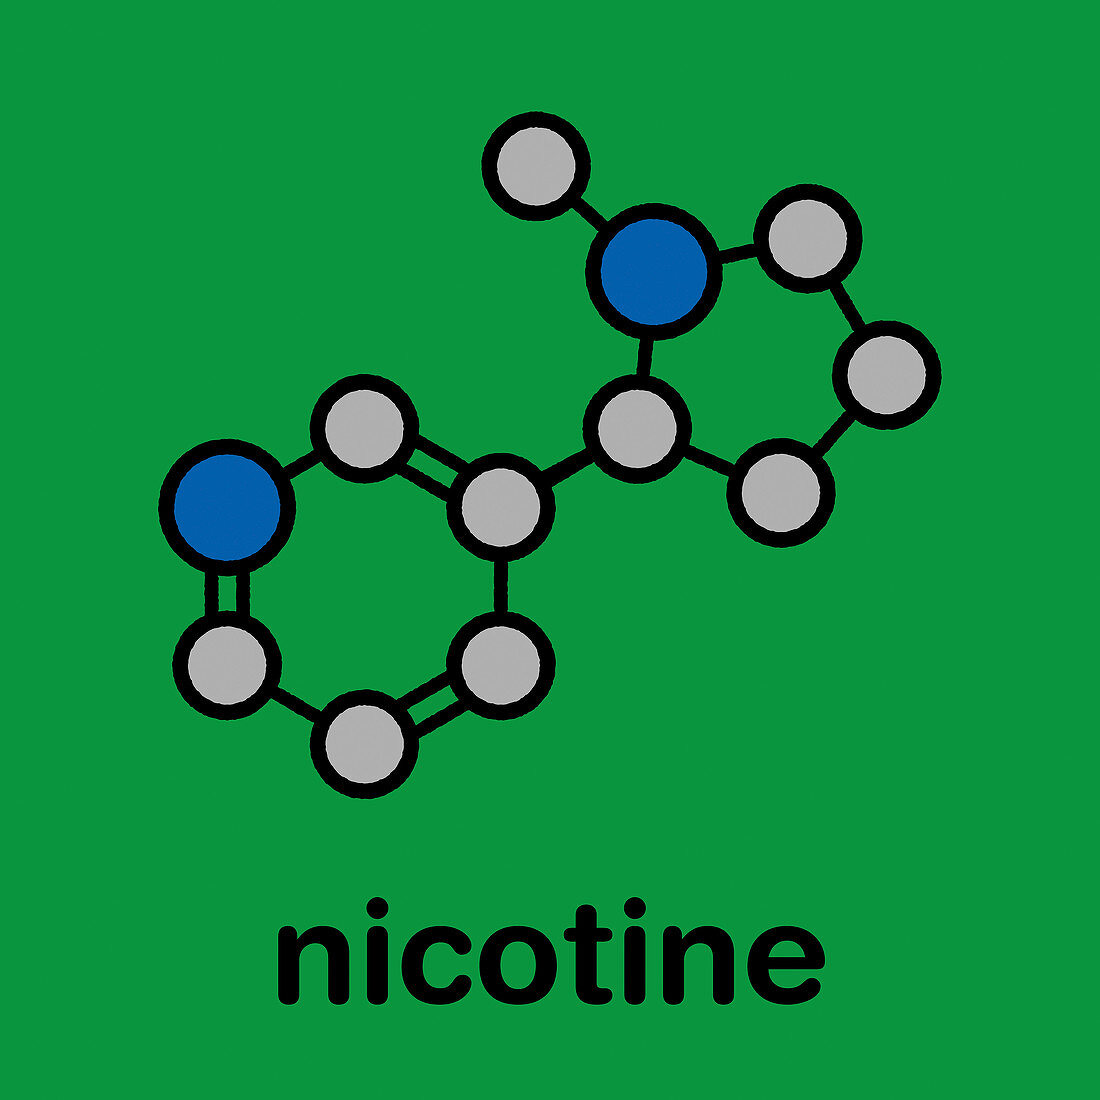 Nicotine tobacco stimulant molecule